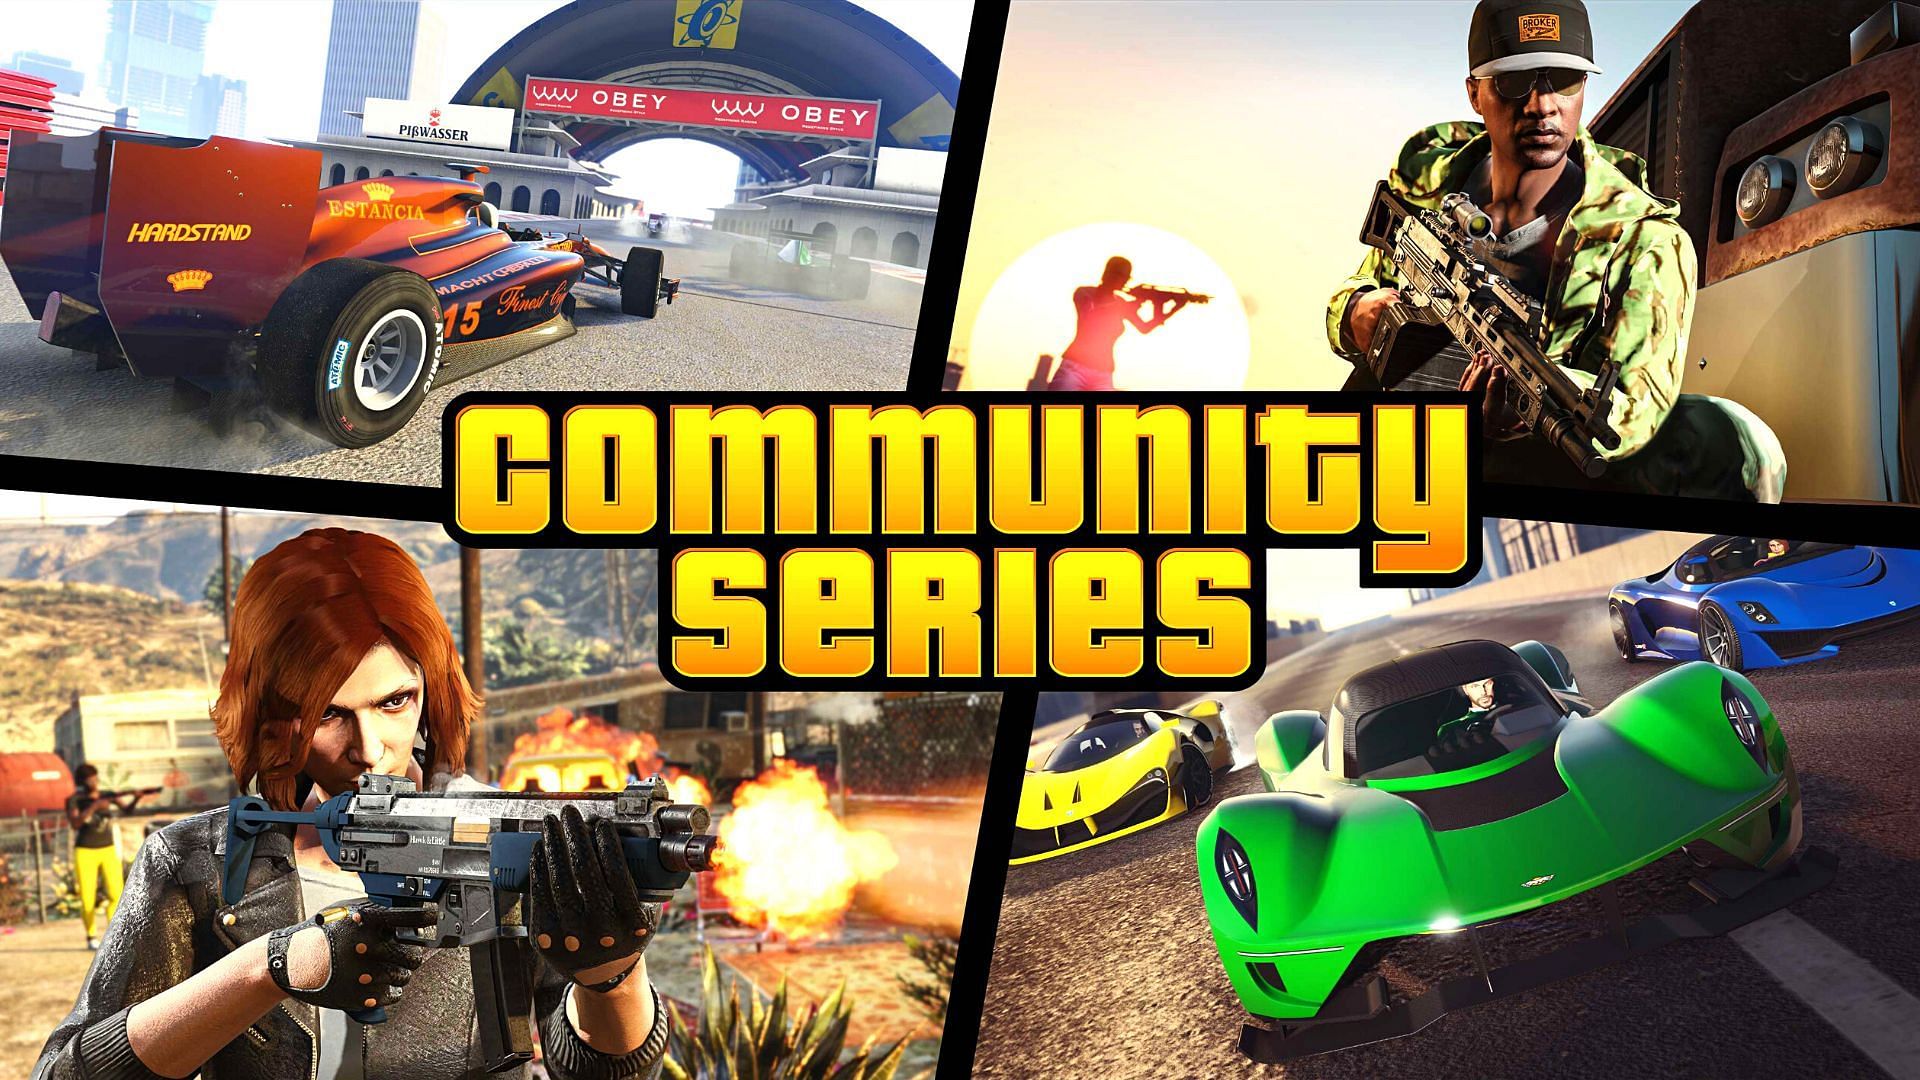 Rockstar has introduced a new GTA Online Community Series playlist showcasing best community-created Jobs (Image via Rockstar Games)